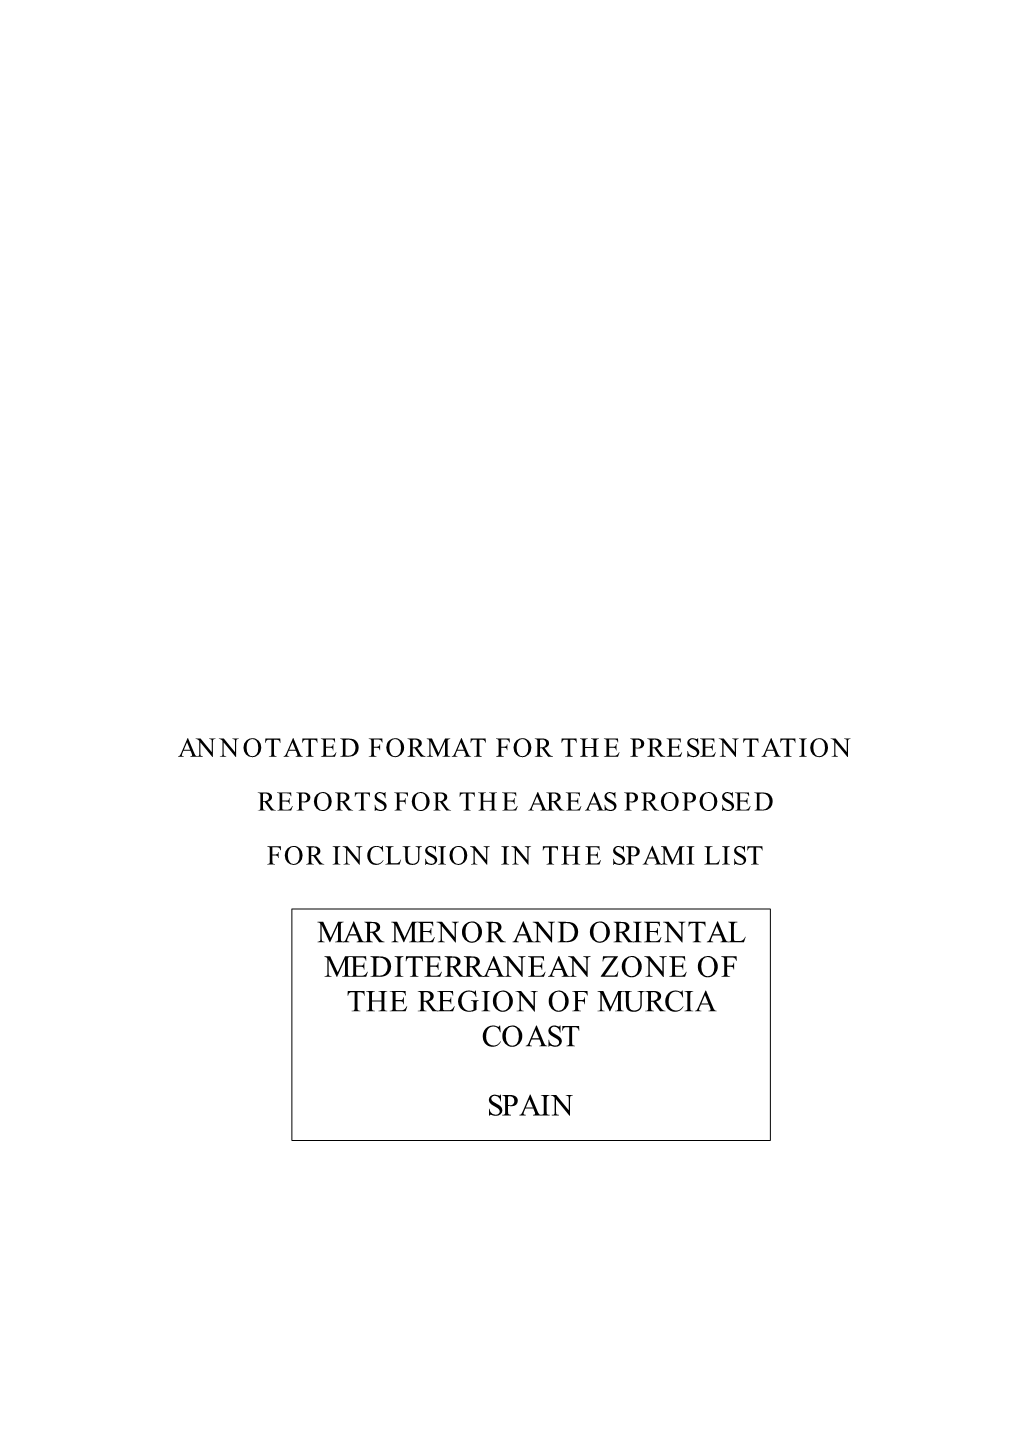 Presentation Report of Mar Menor and Oriental Mediterranean Zone